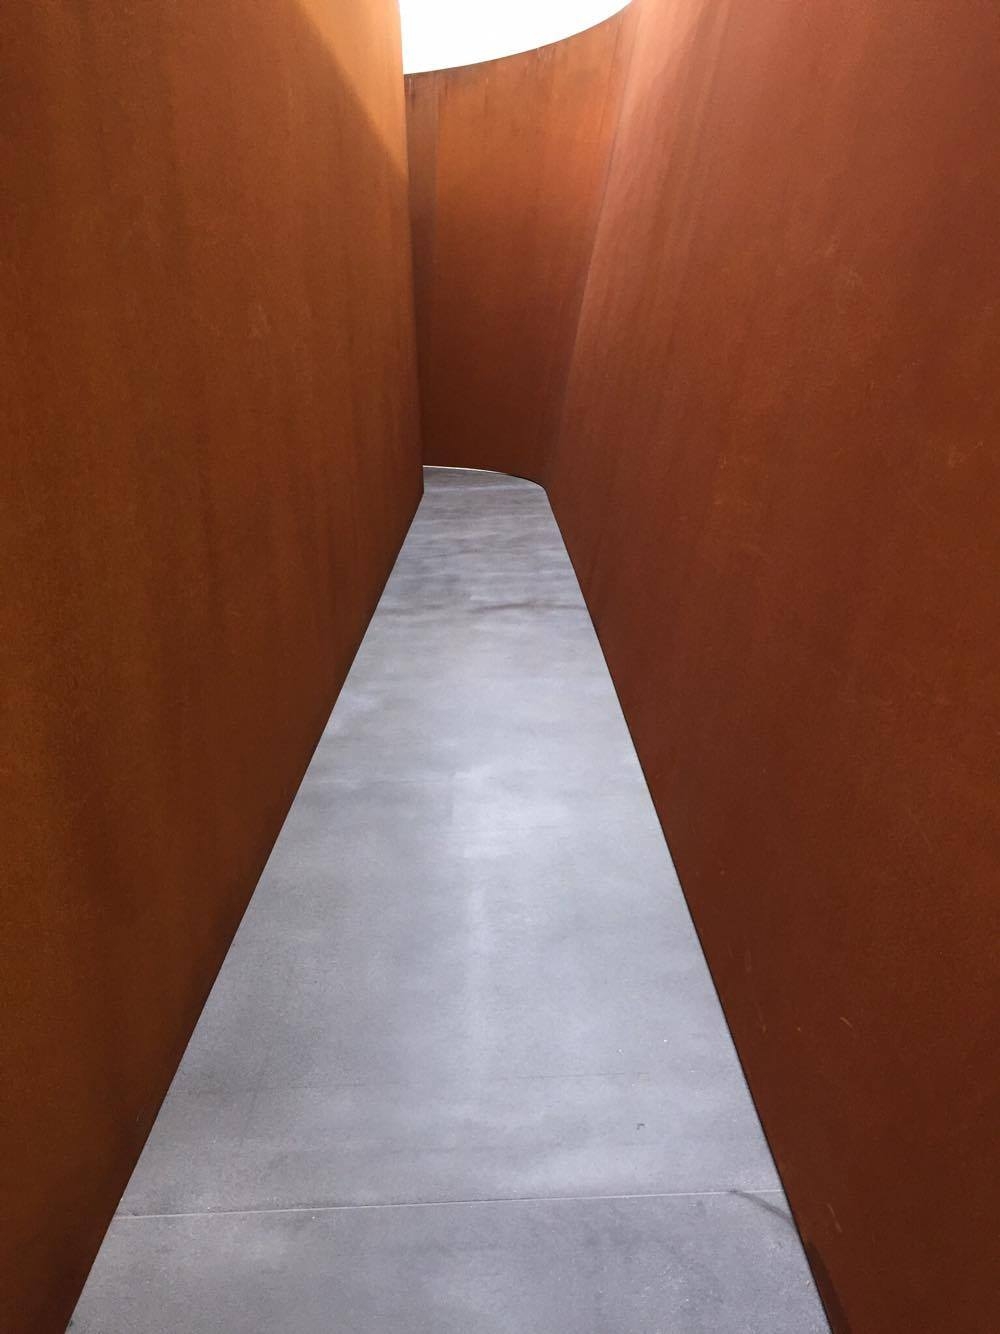 Richard Serra exhibition, Gagosian